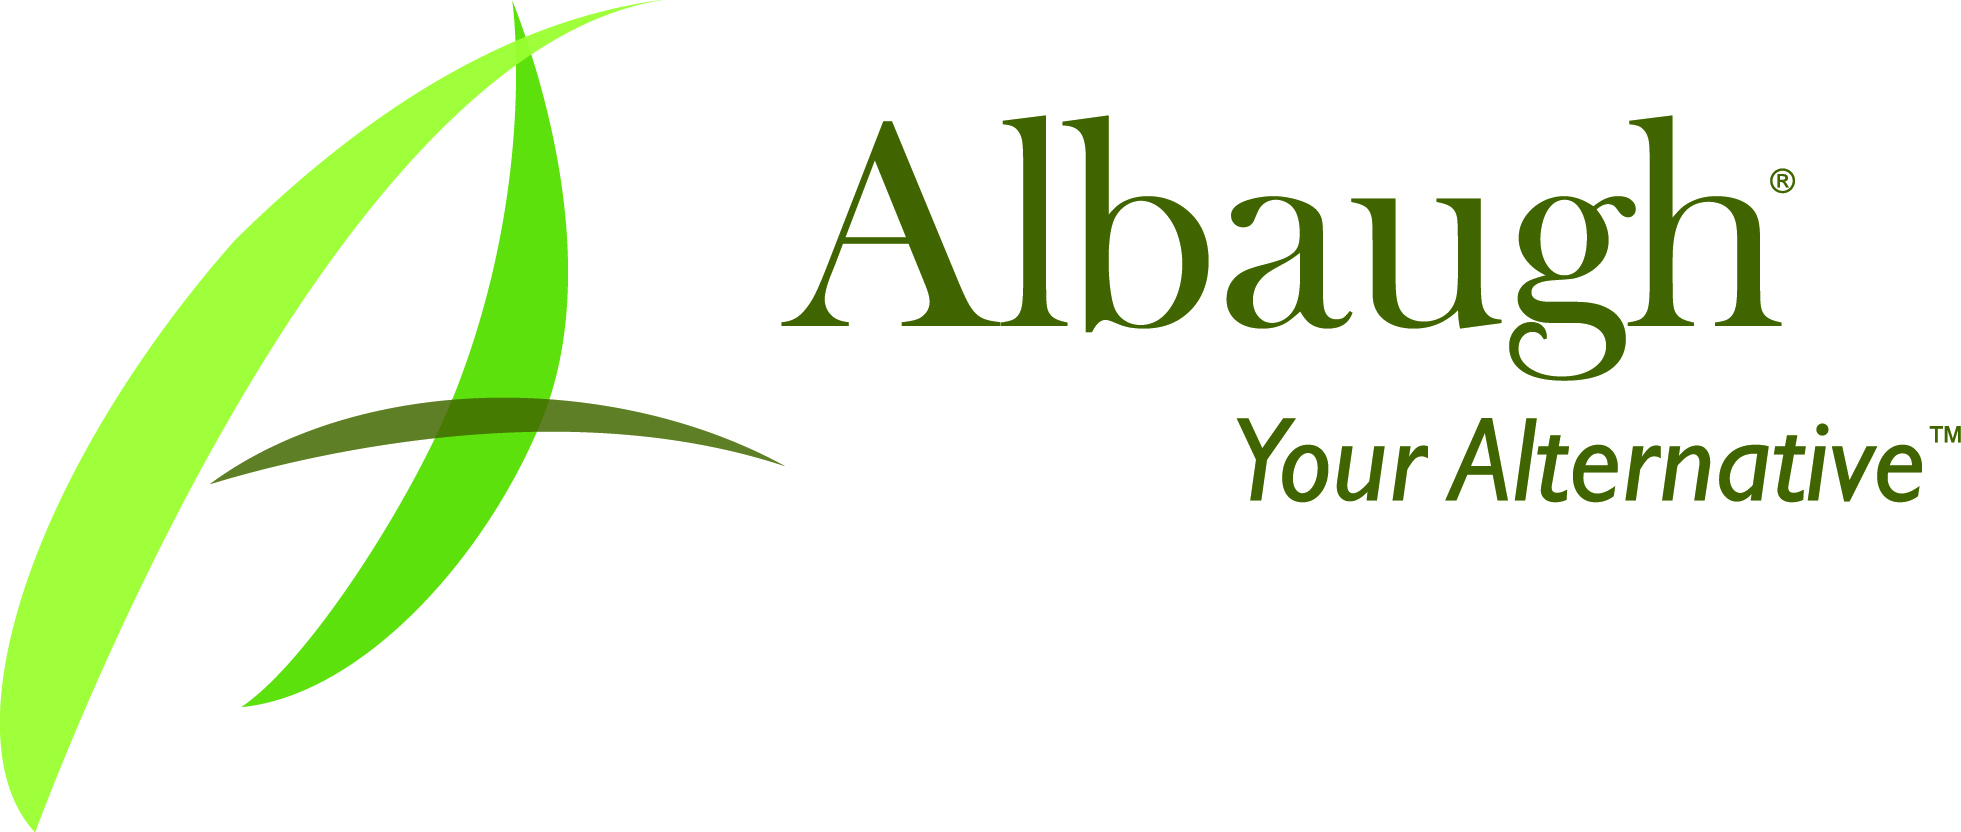 Albaugh - Your Alternative